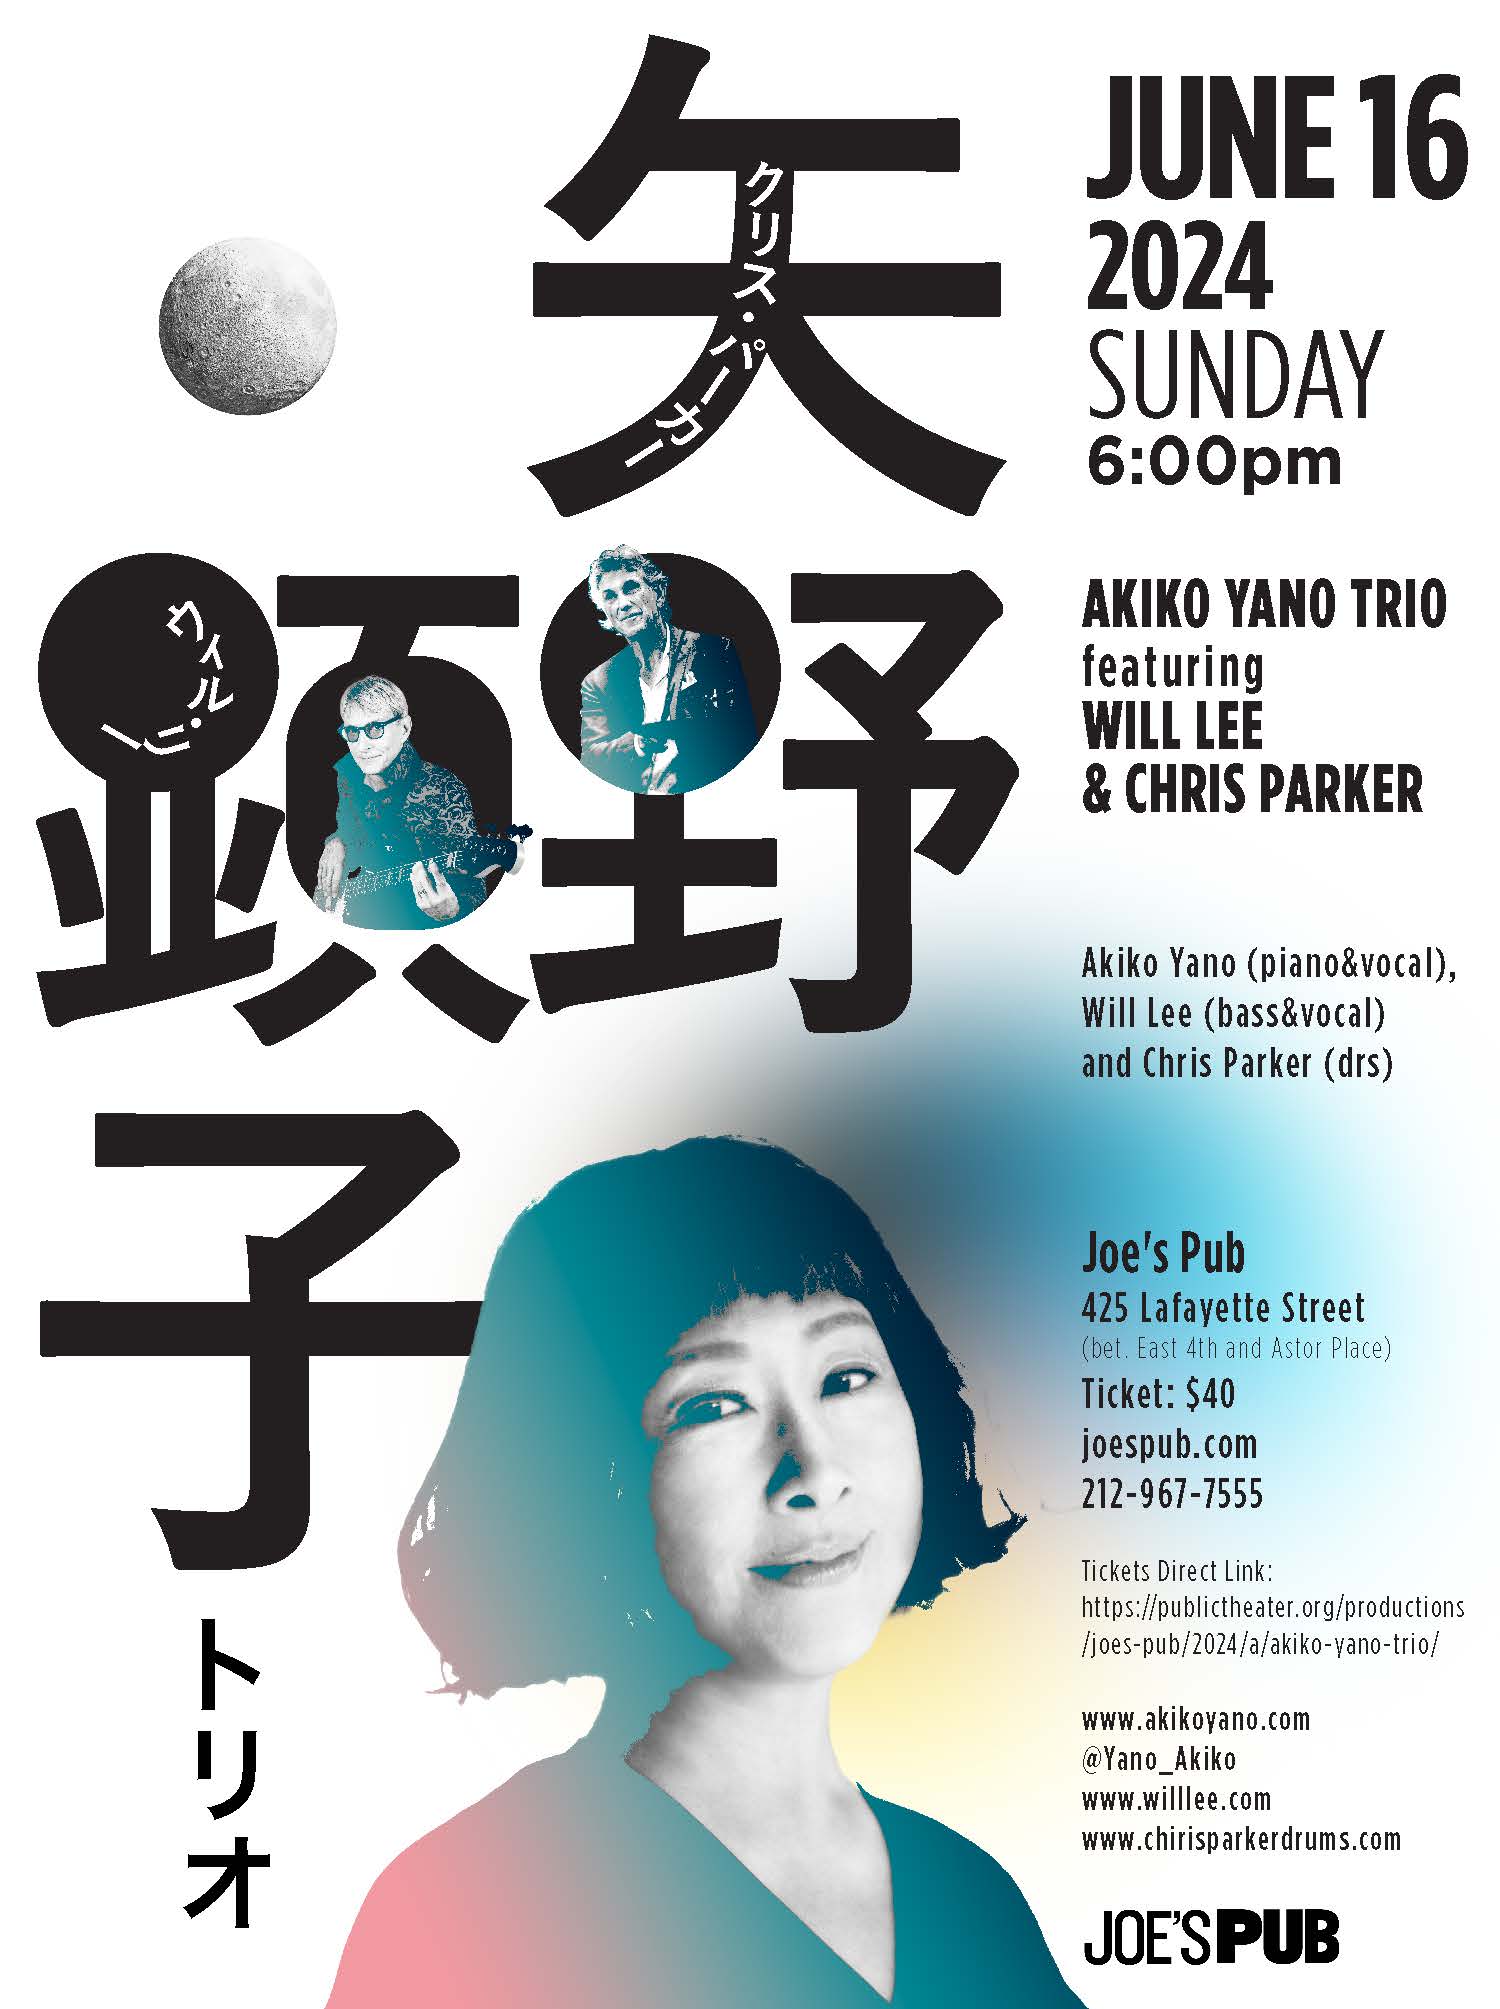 Akiko Yano Trio at Joe's Pub NYC 2024 Flyer. Credit: Provided by Sony Music Entertainment Japan